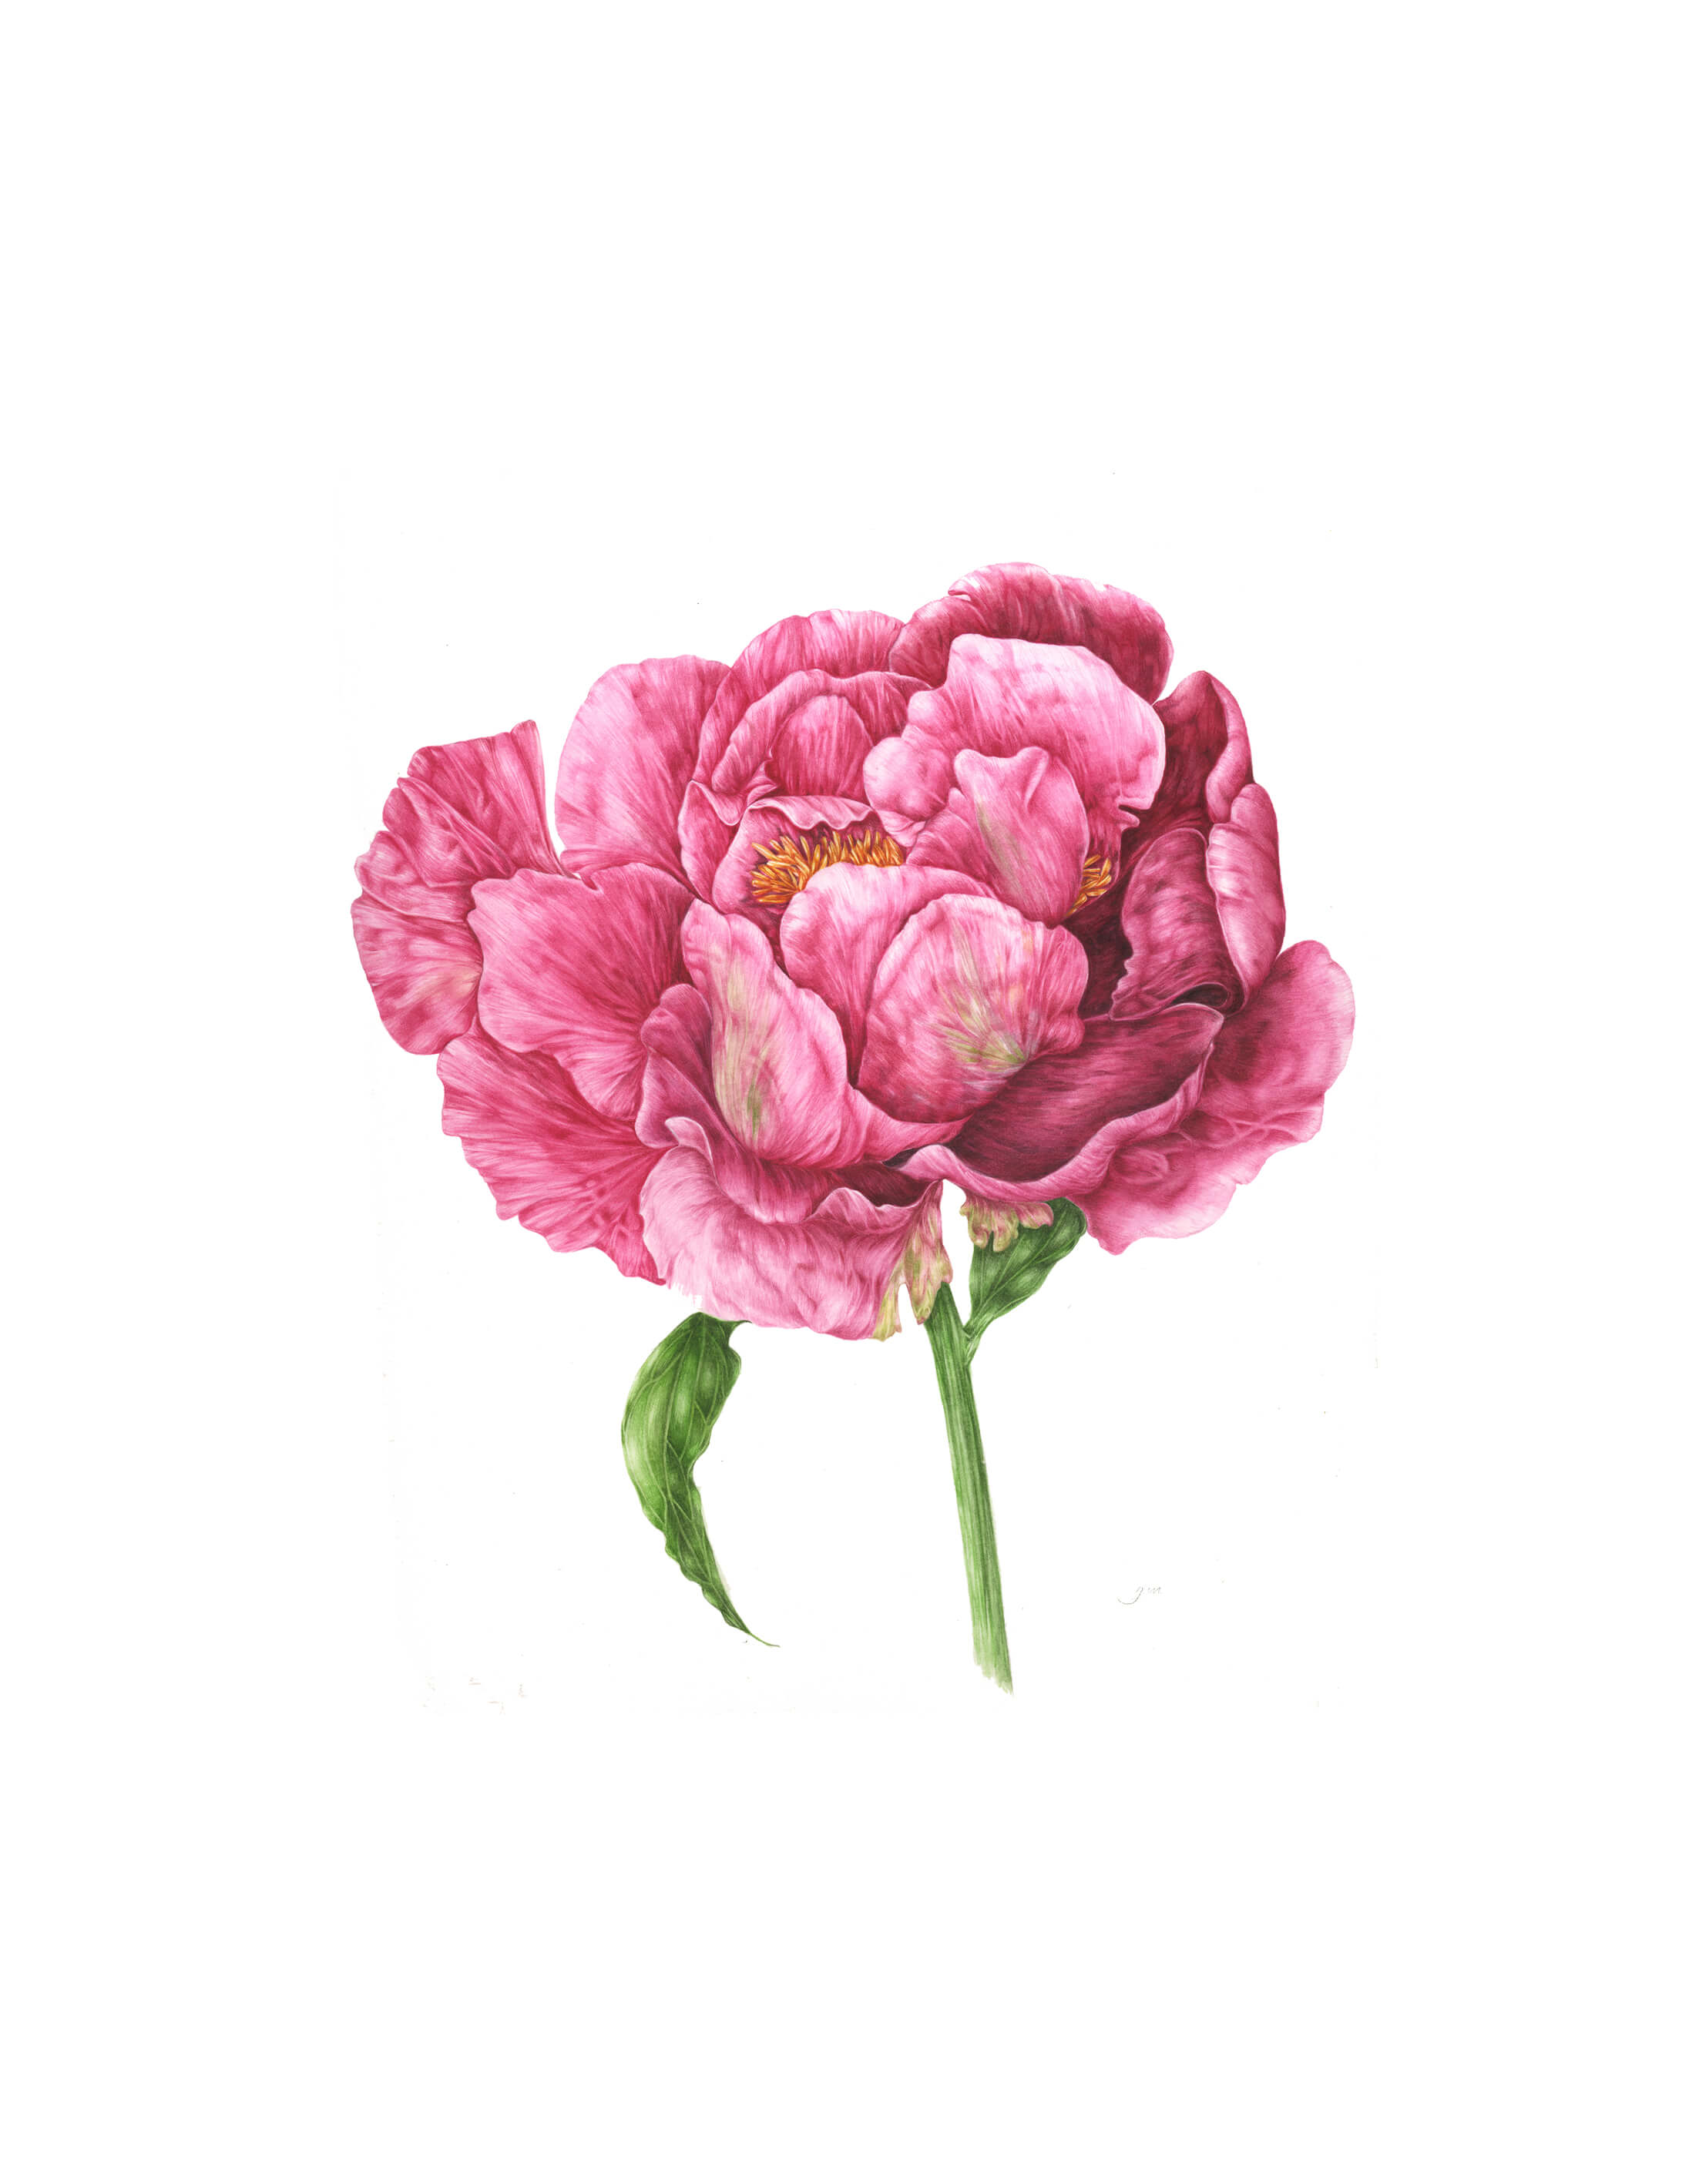 Peonie pink flower - botanical illustration by workshop tutor Giacomina Ferrillo. 